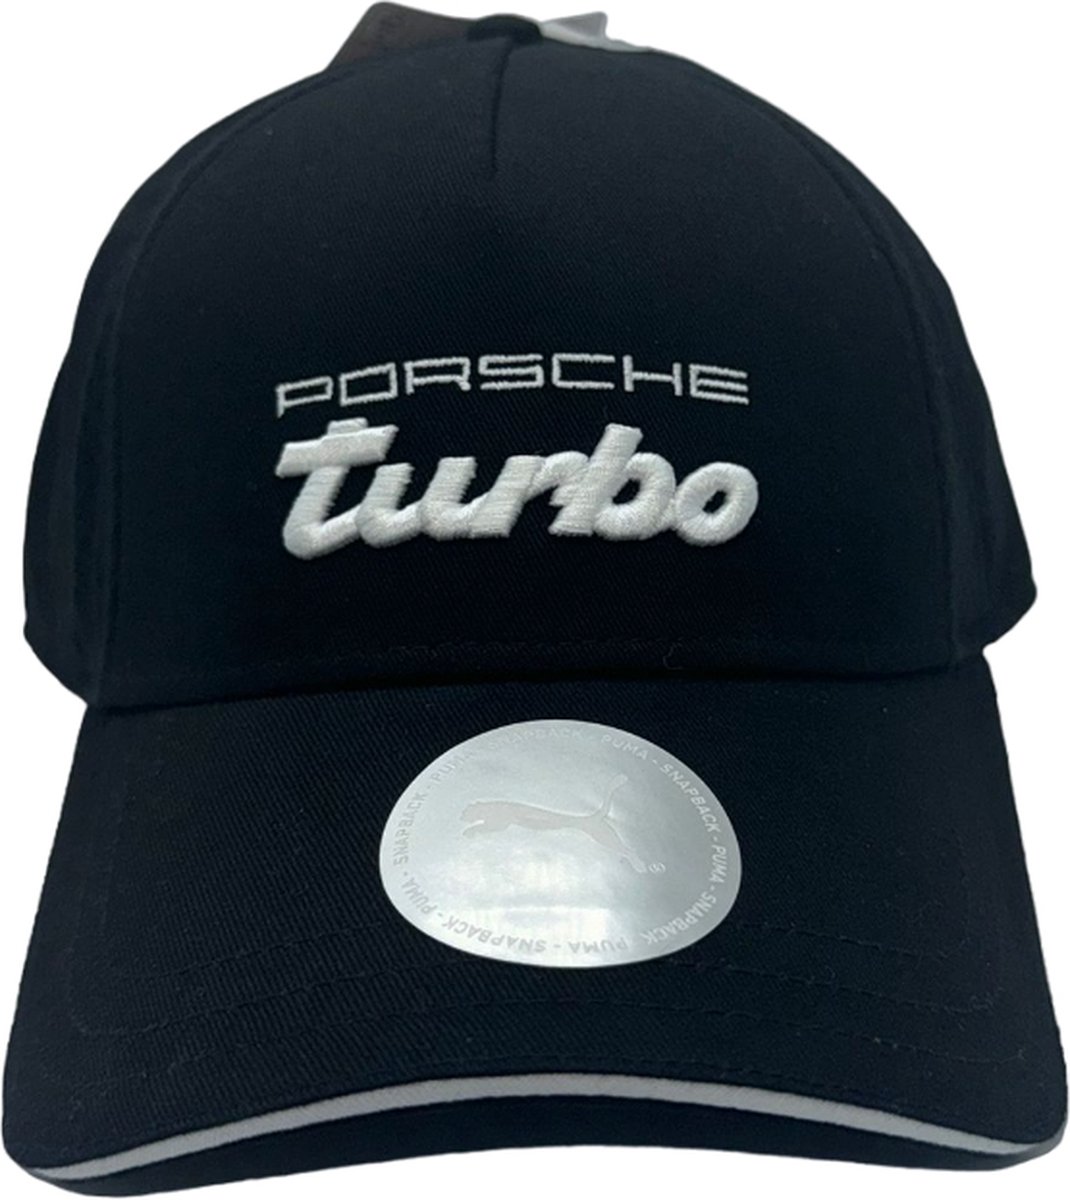 Puma - Casquette Porsche Turbo - Zwart - Taille Unique